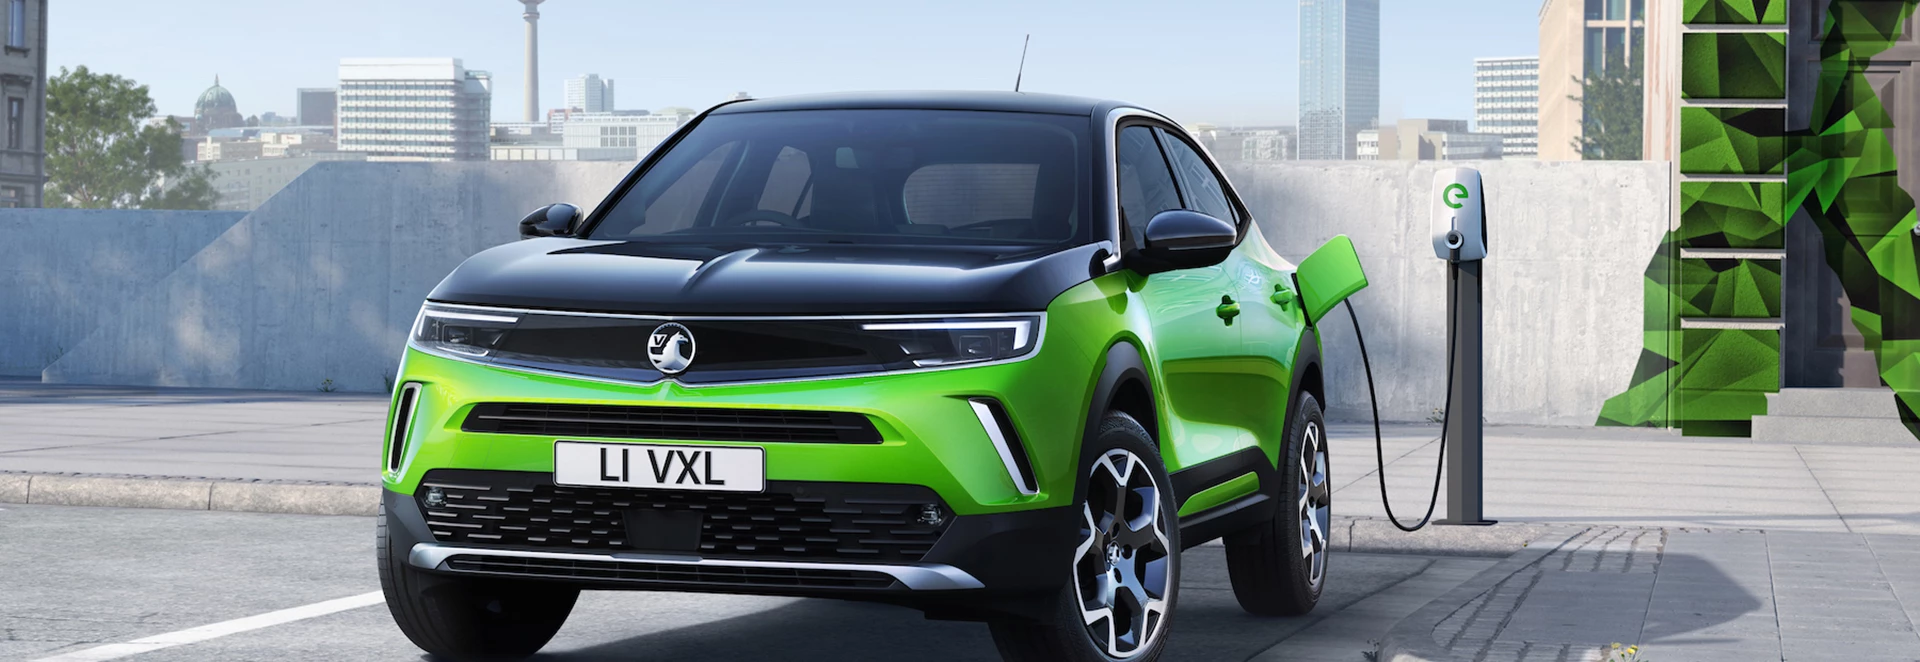 2021 Vauxhall Mokka uneveiled as stylish tech-filled crossover 